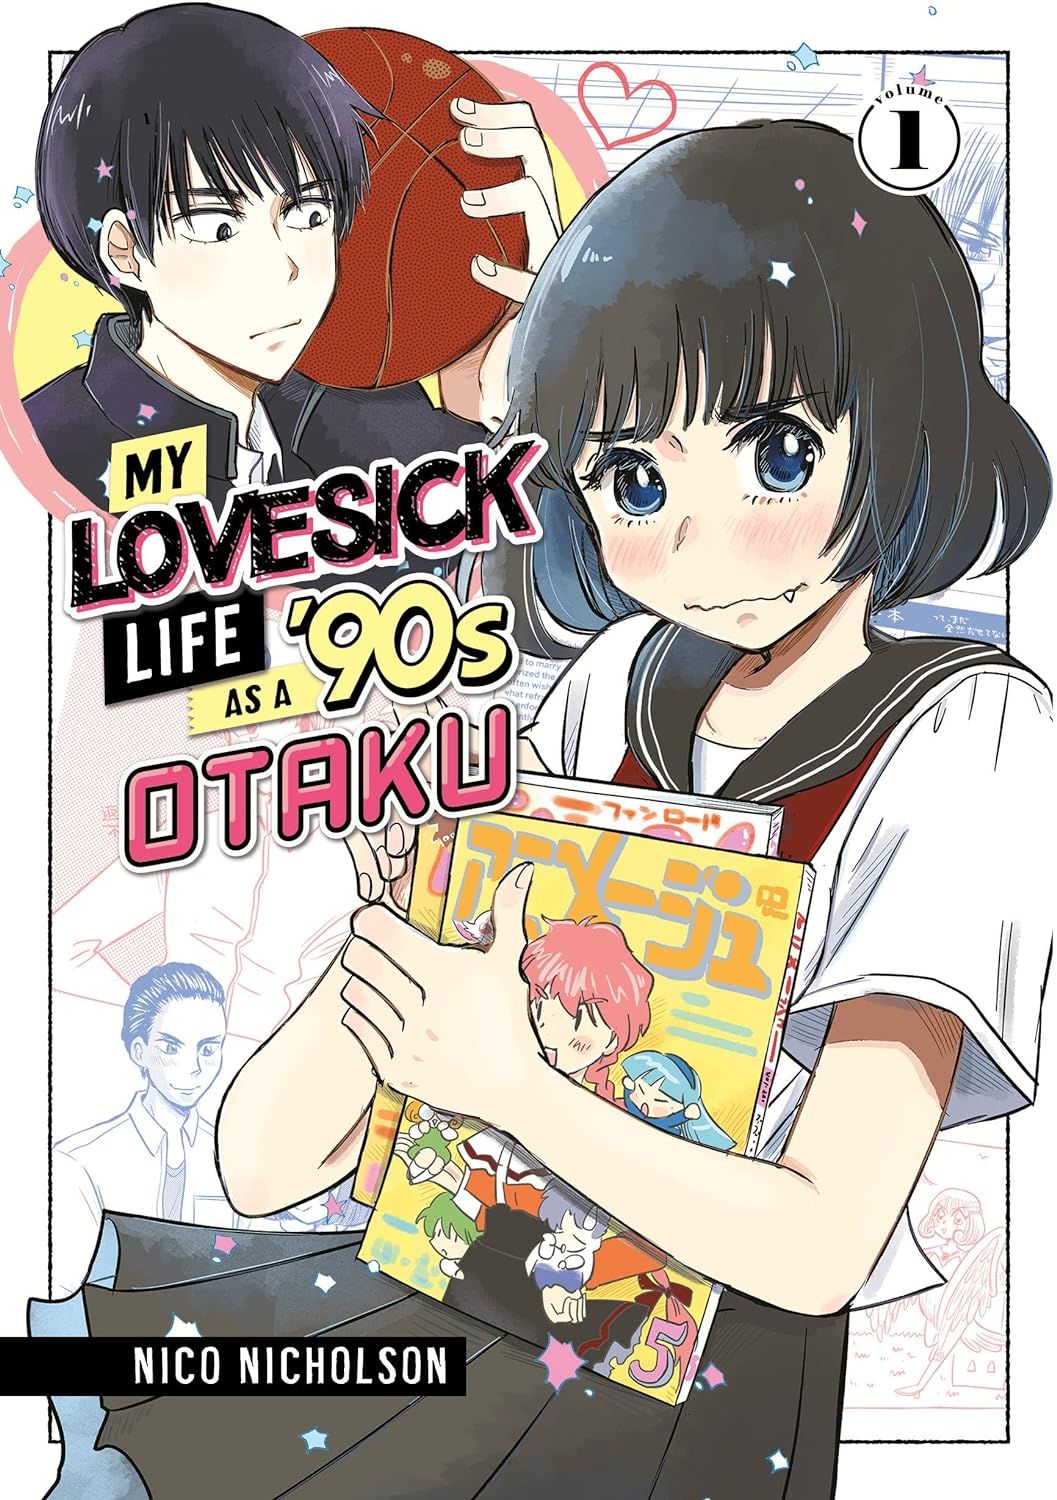 My Lovesick Life as a '90s Otaku by Nico Nicholson cover